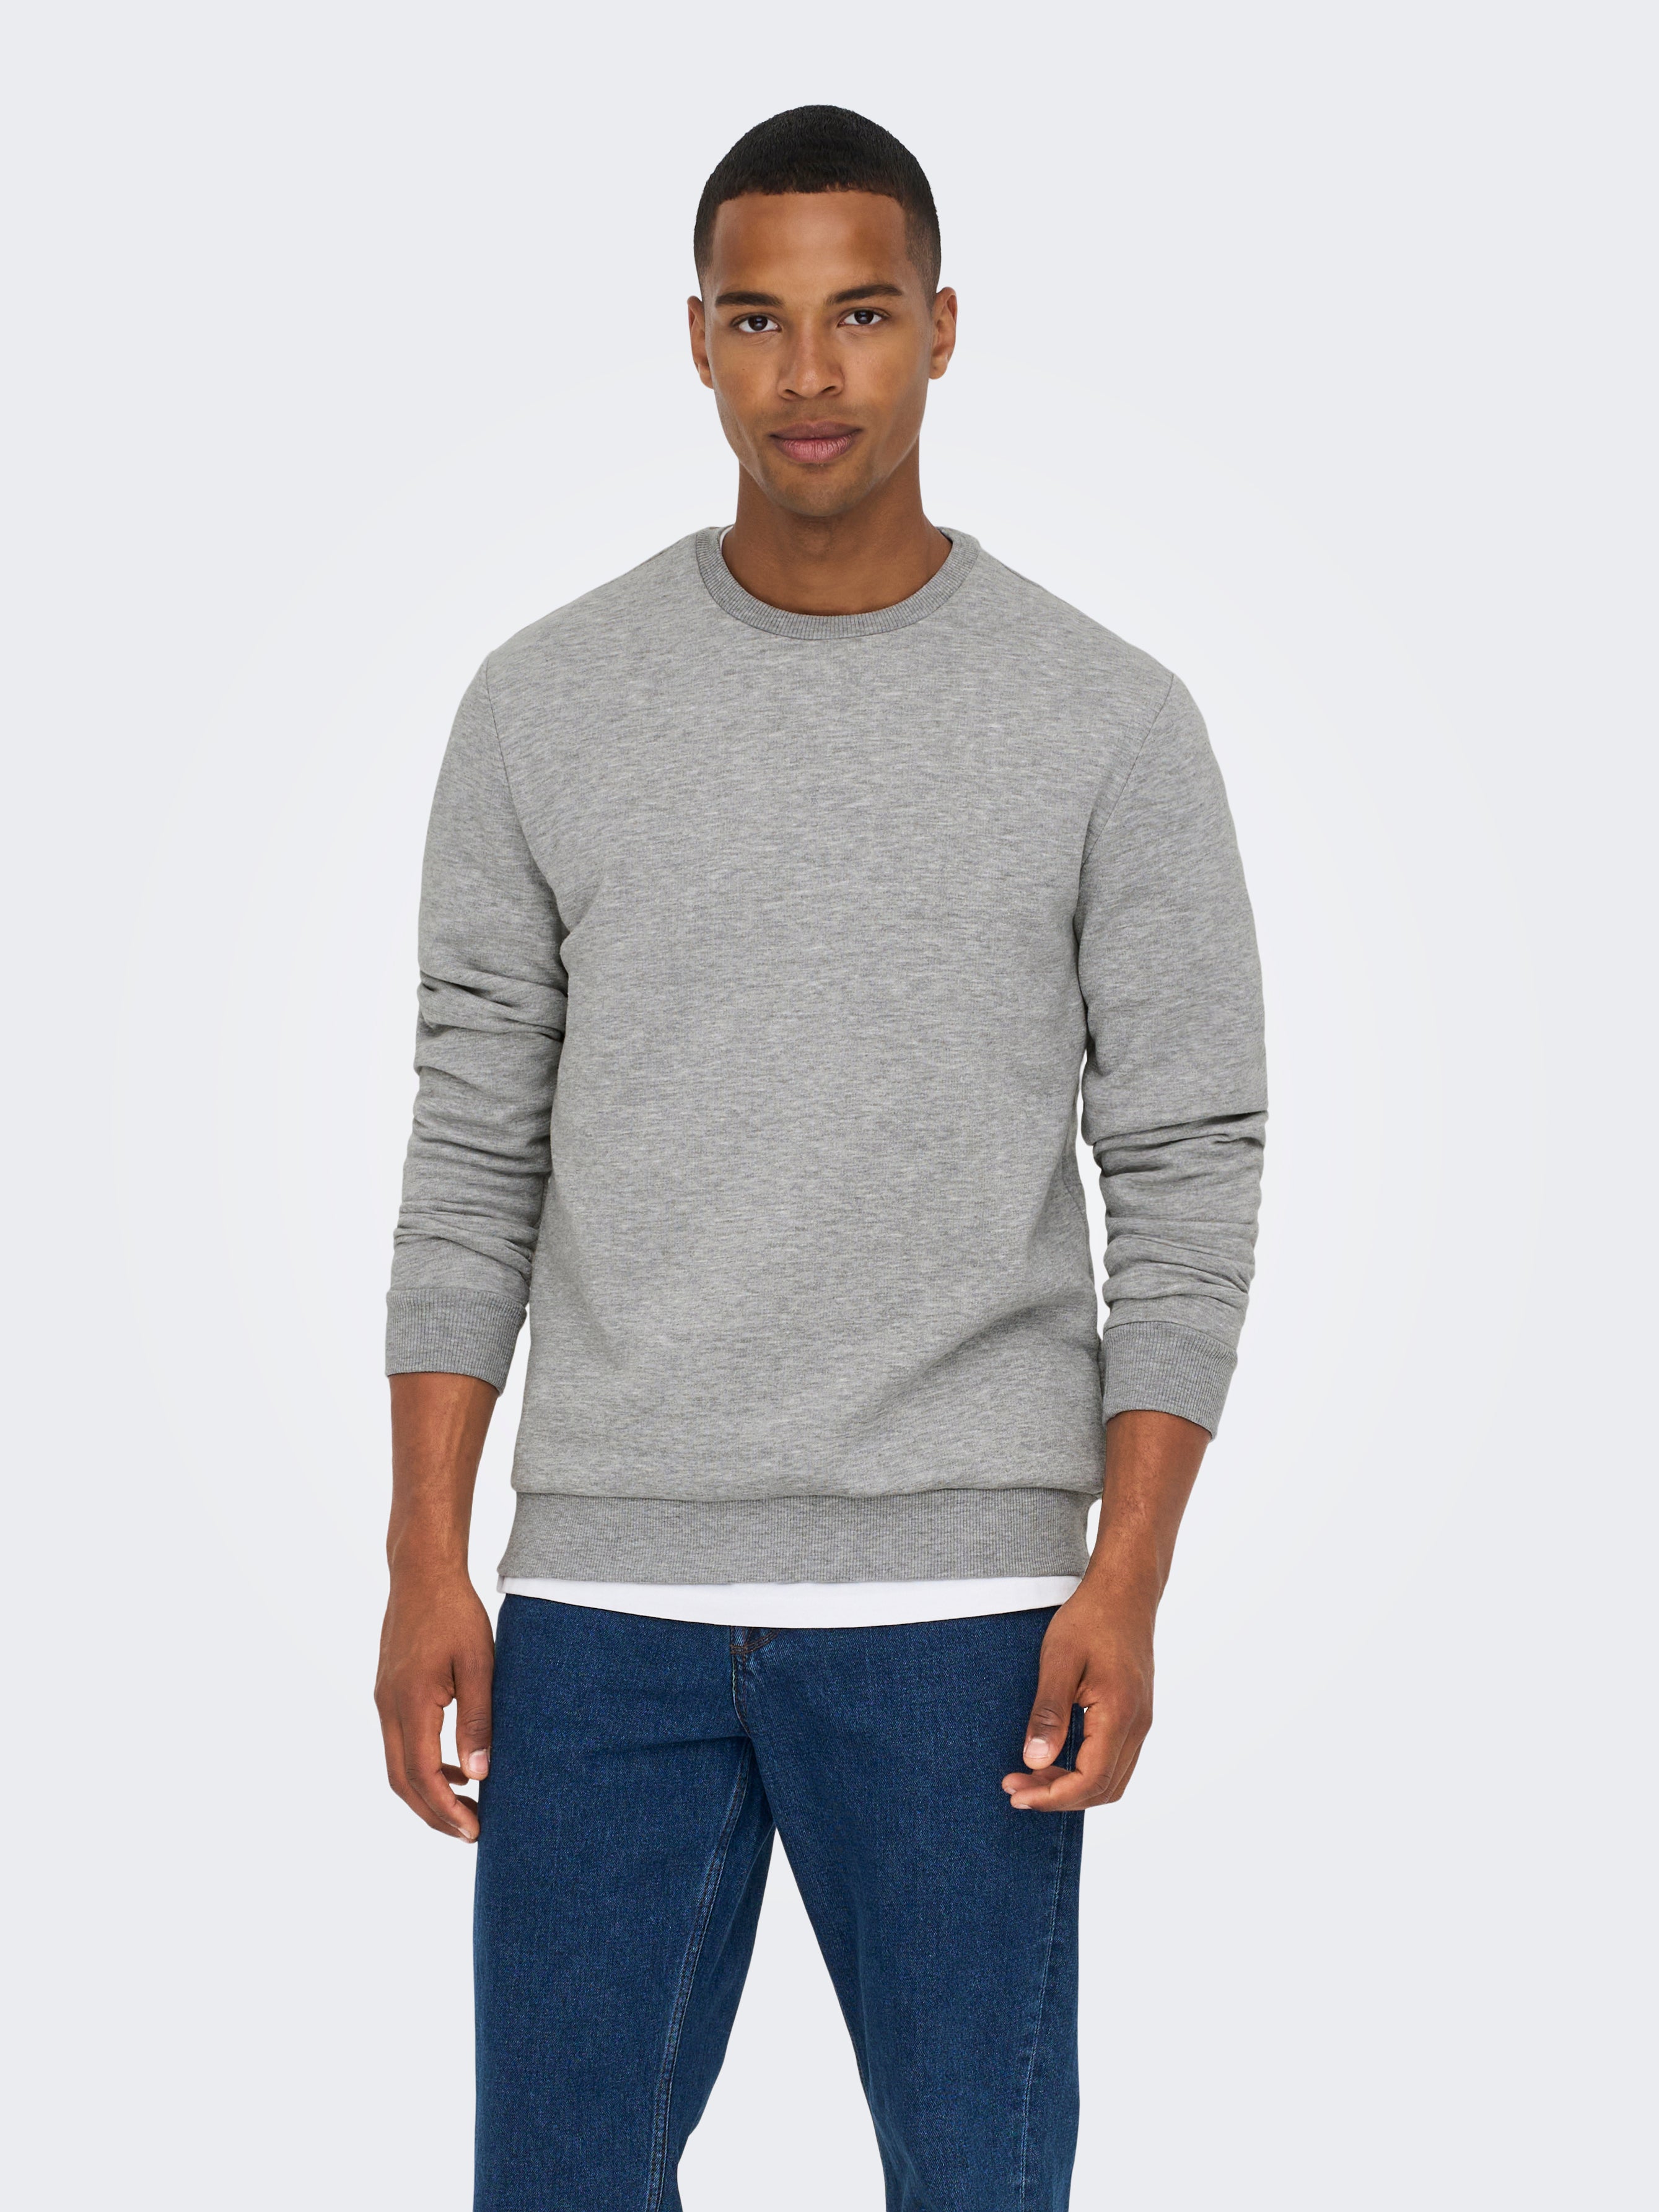 ONLY & SONS sweatshirt Purple L discount 57% MEN FASHION Jumpers & Sweatshirts Sports 